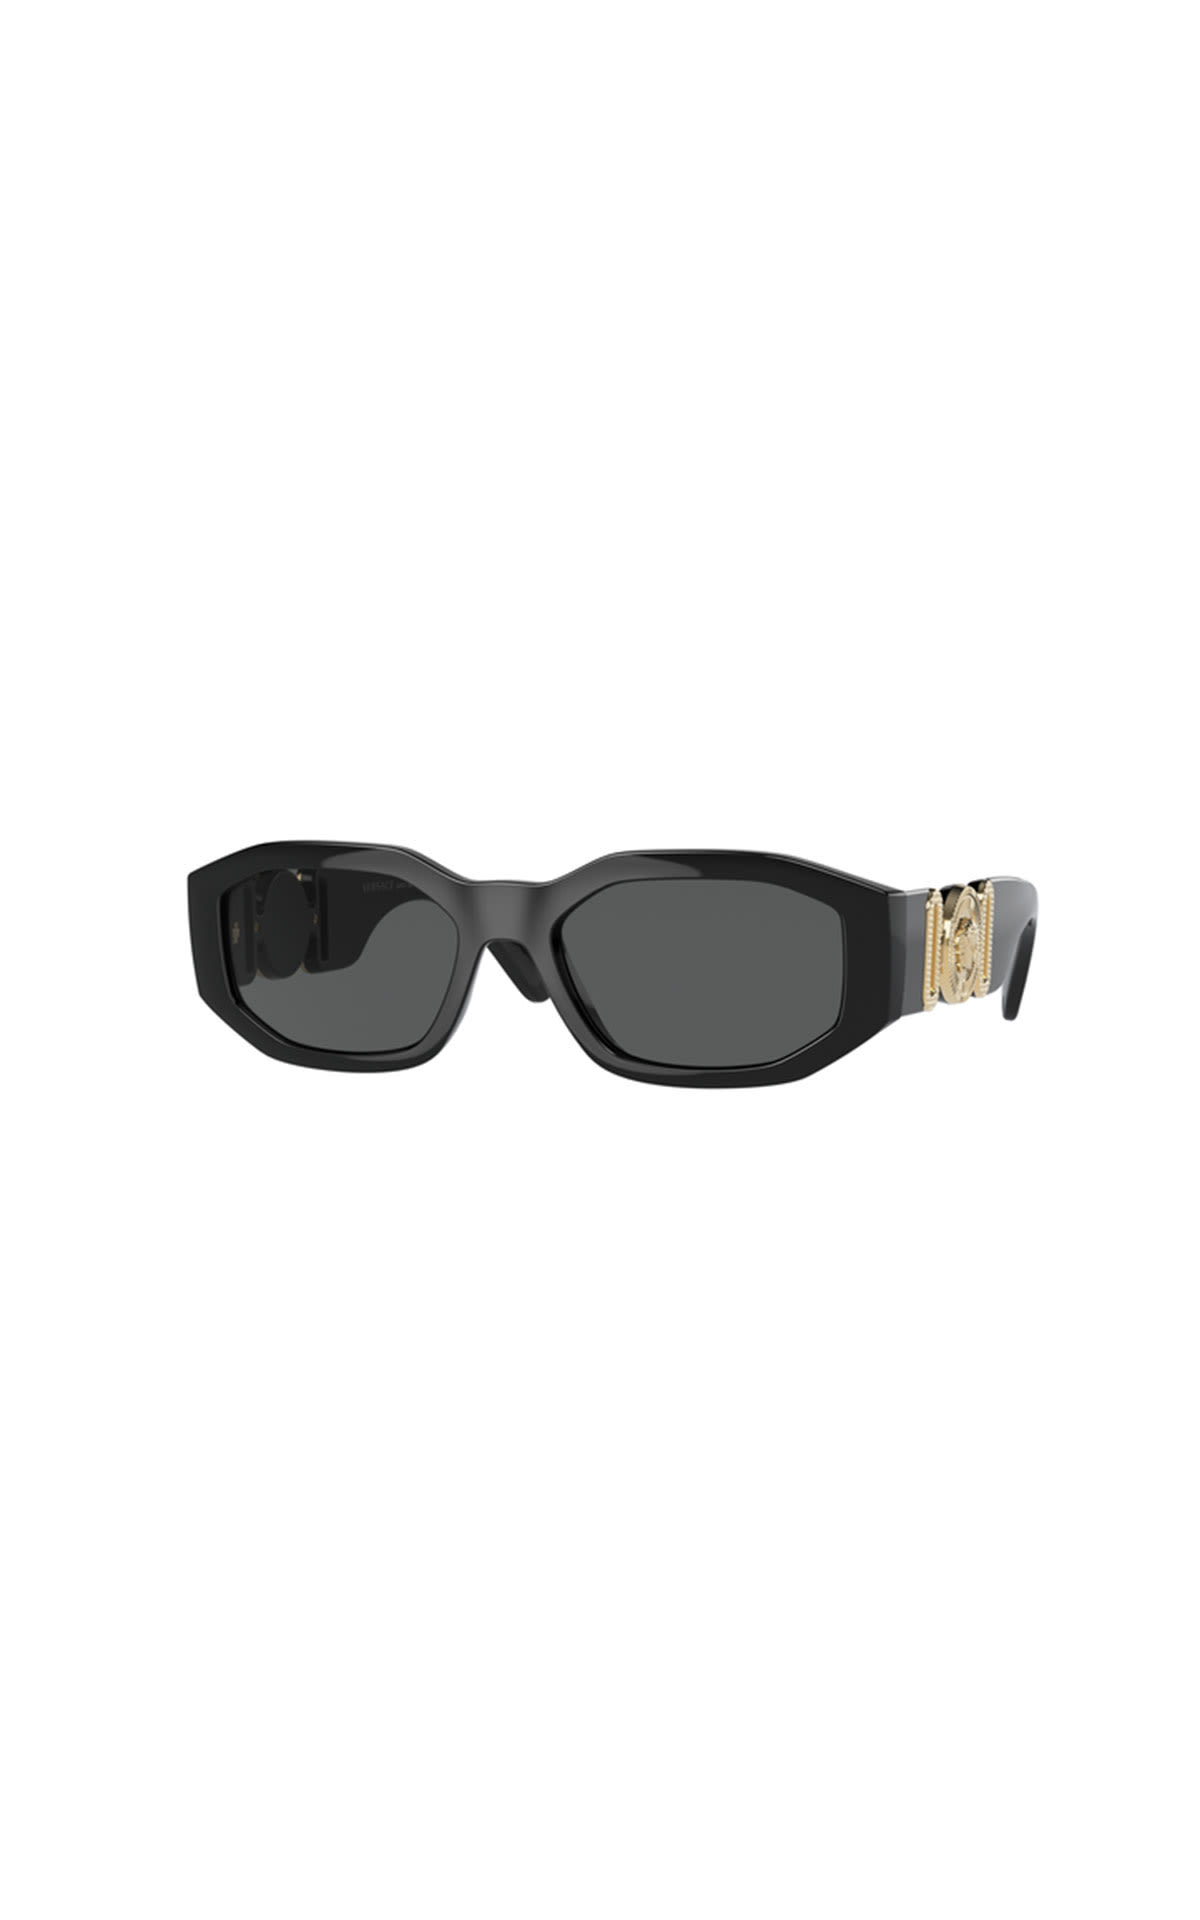 Black Versace sunglasses sunglasshut